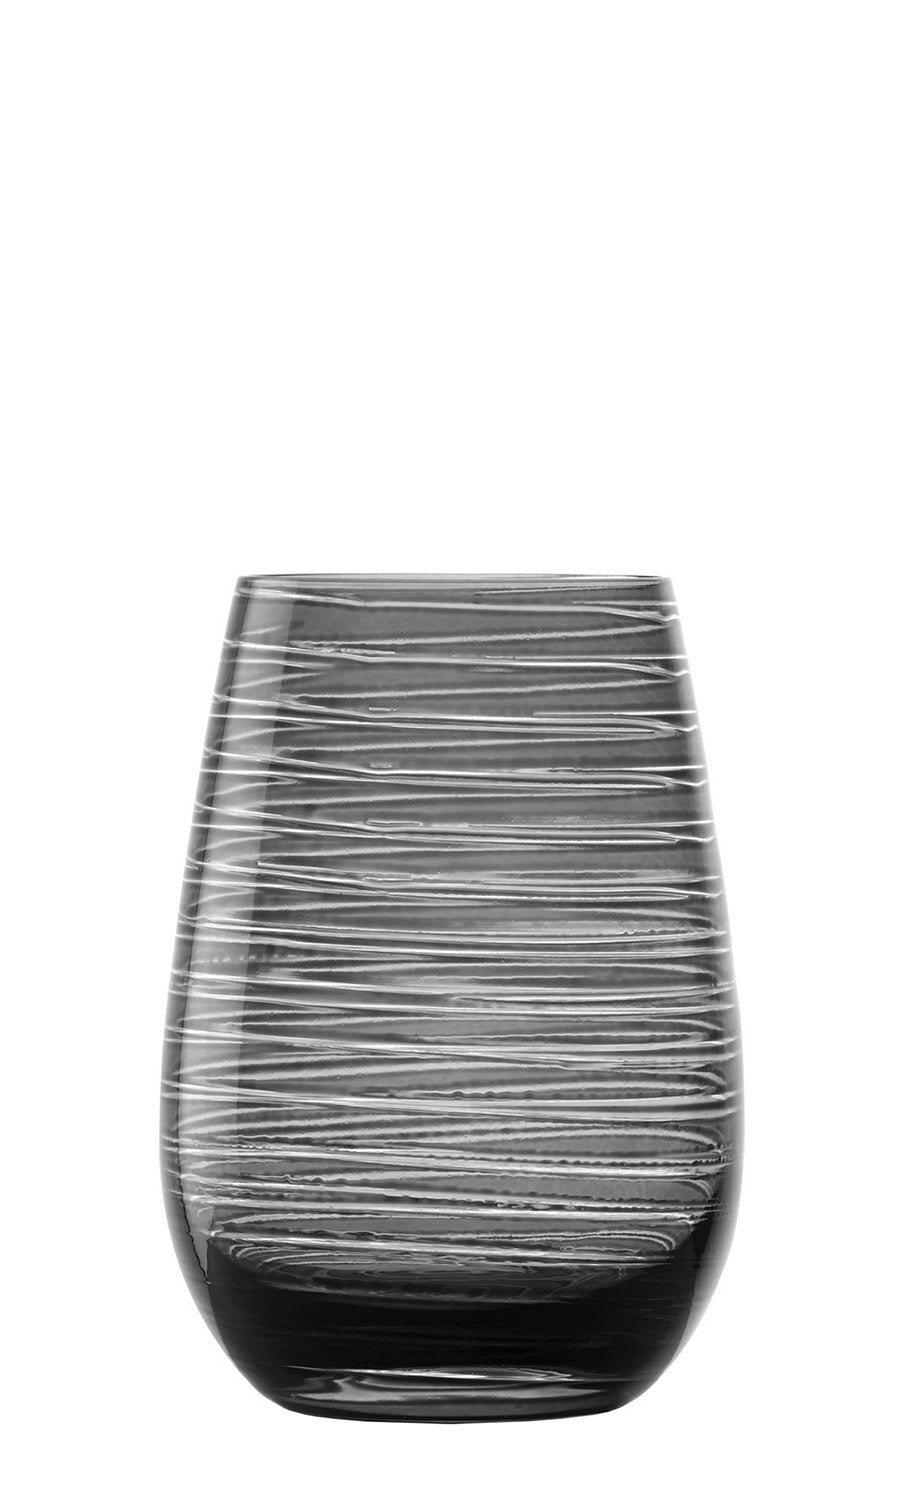 Stoelzle Twister Tumbler Smoky Grey Glass Set of 6 Lead Free Crystal